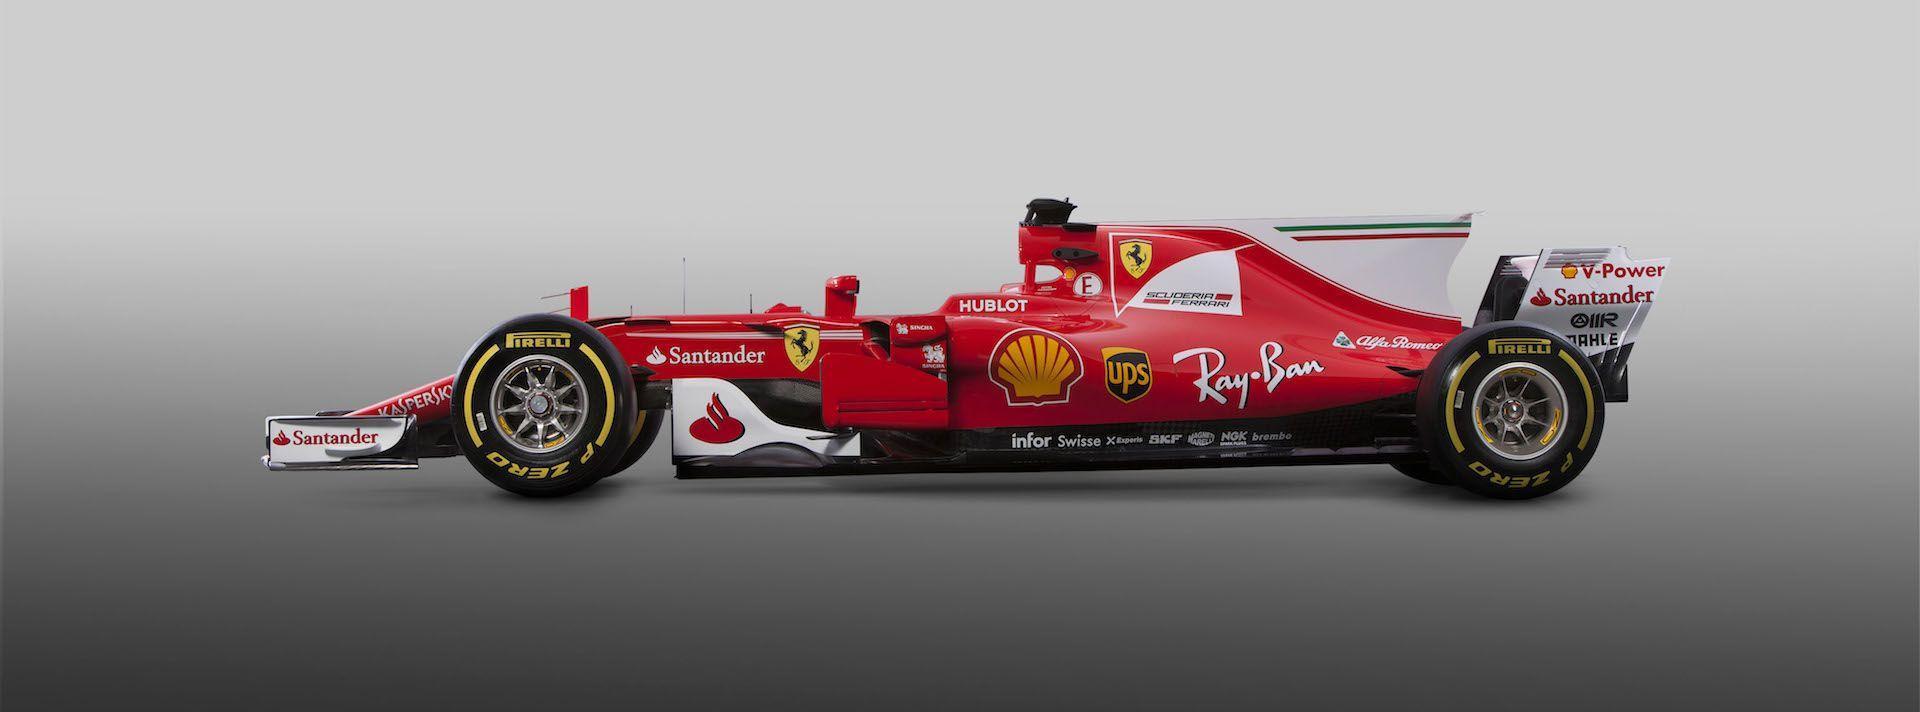 Ferrari&;s New Formula 1 Car Is Named SF70H